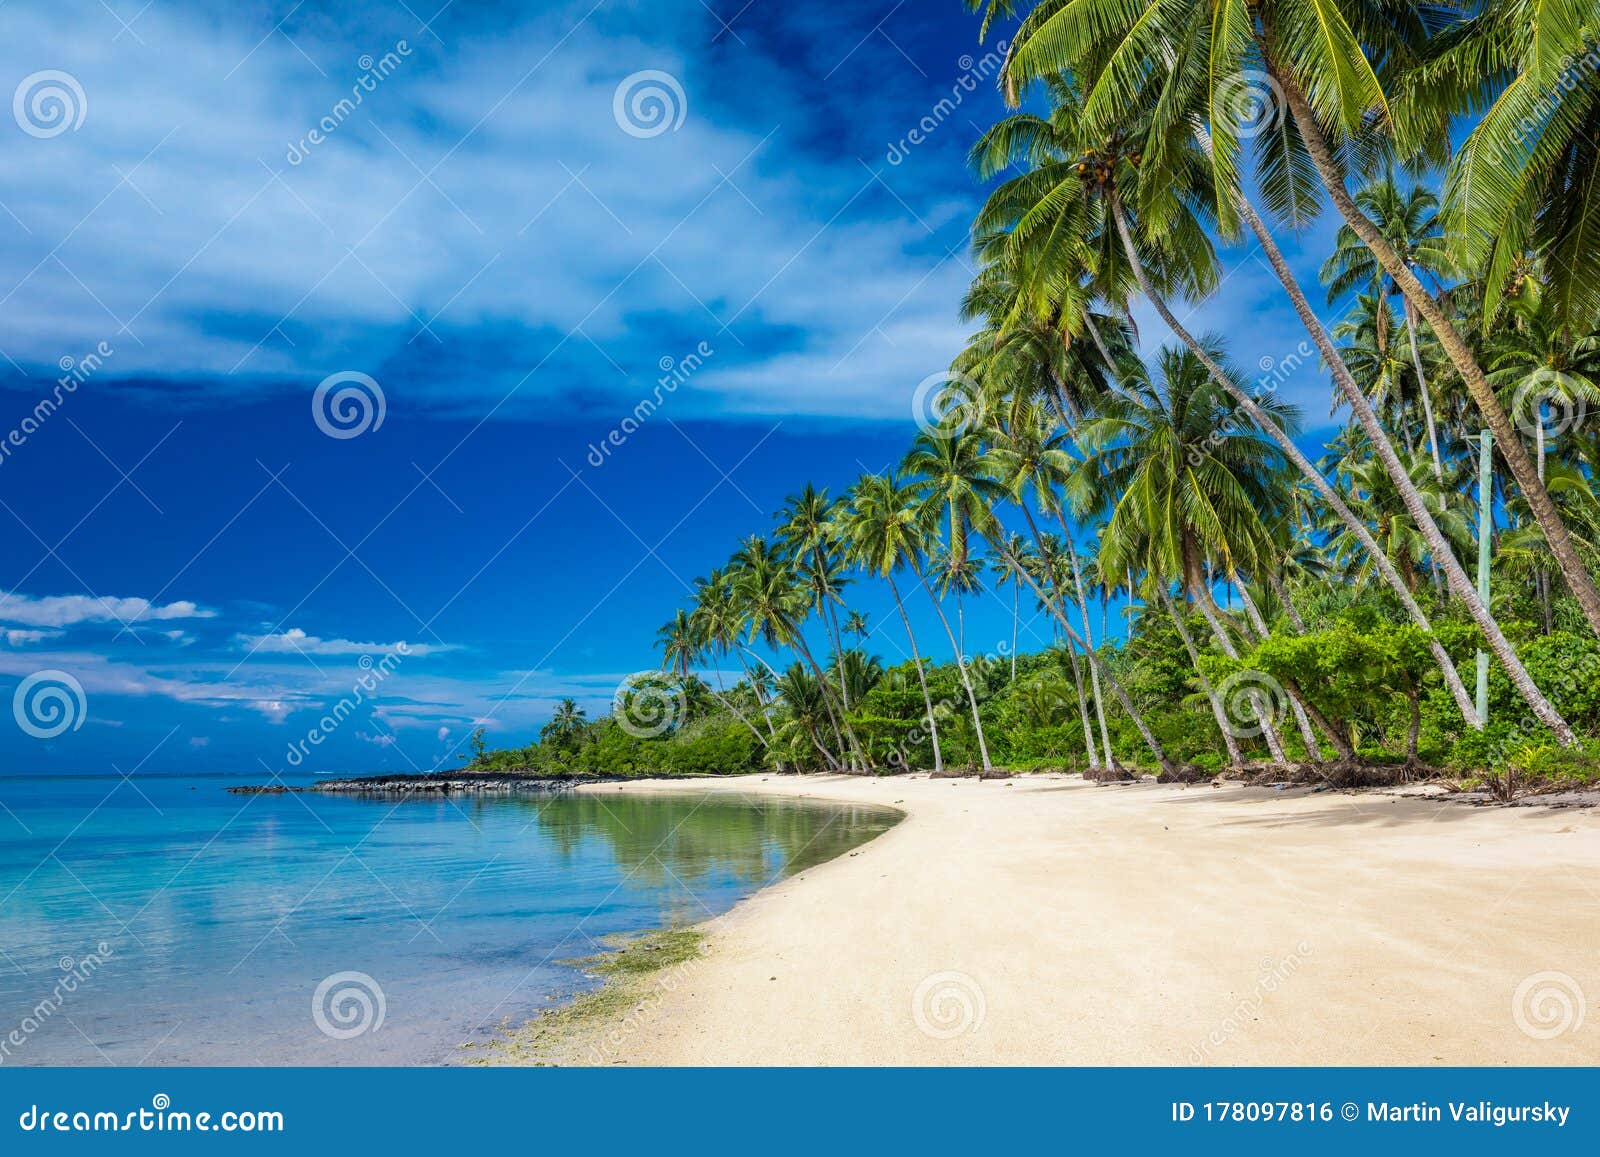 Tropical Beach on South Side of Samoa Island with Coconut Palm Trees ...